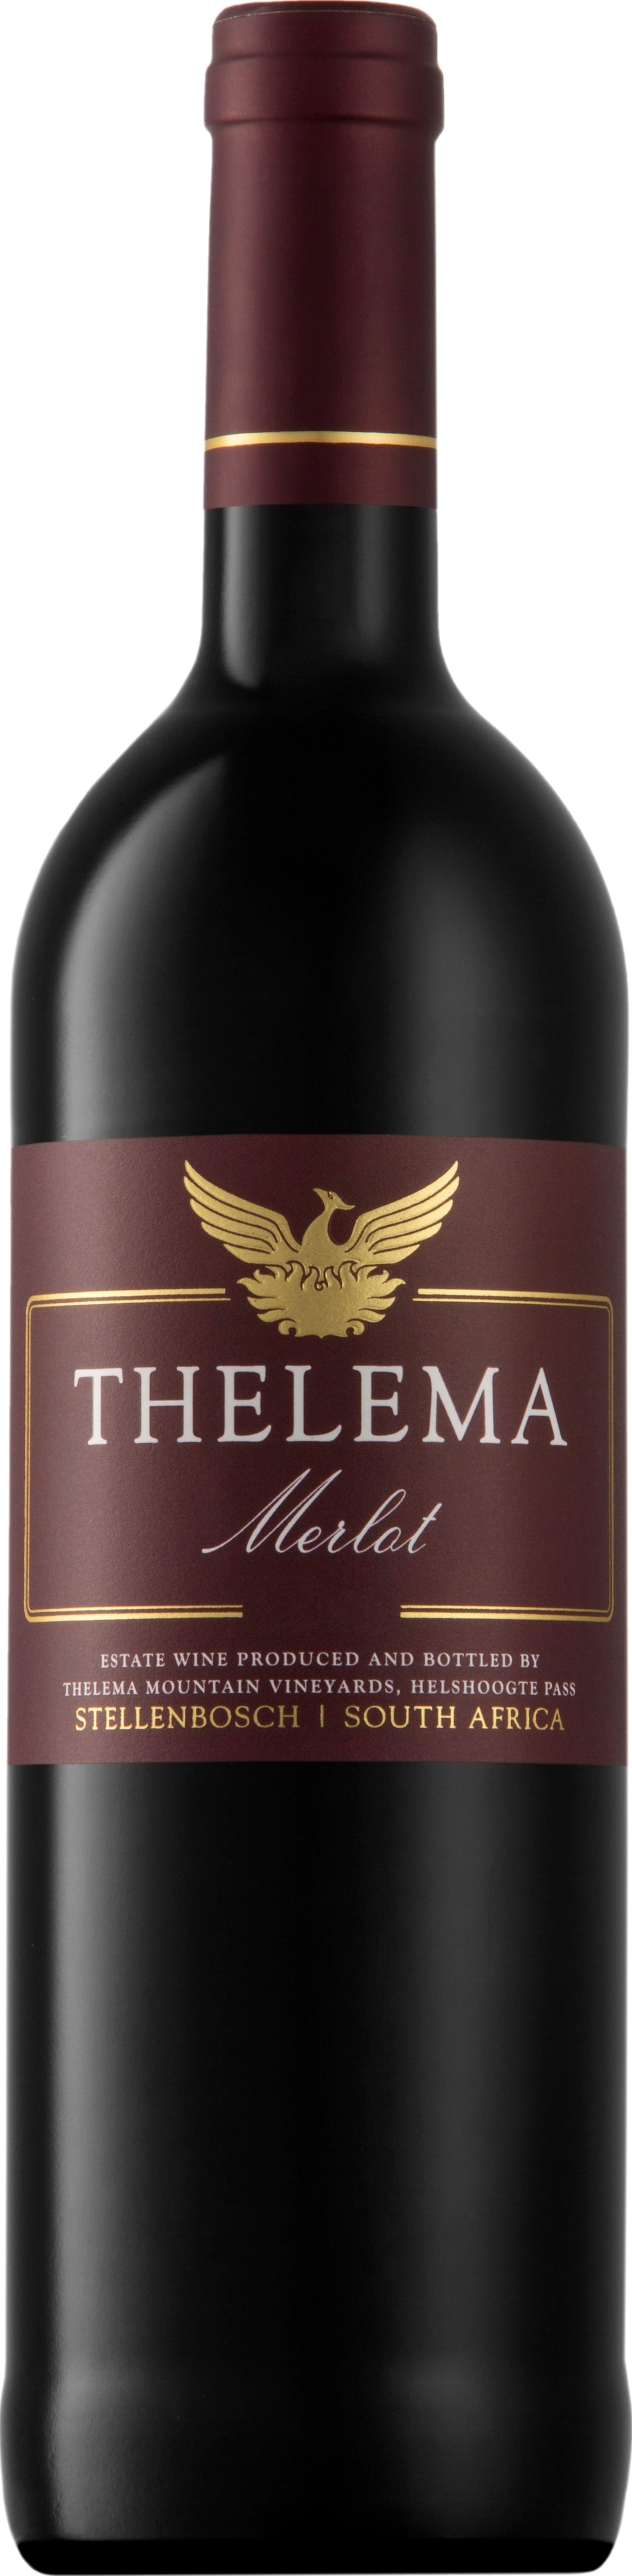 Thelema Mountain Vineyards Merlot 2020 75cl - Buy Thelema Mountain Vineyards Wines from GREAT WINES DIRECT wine shop